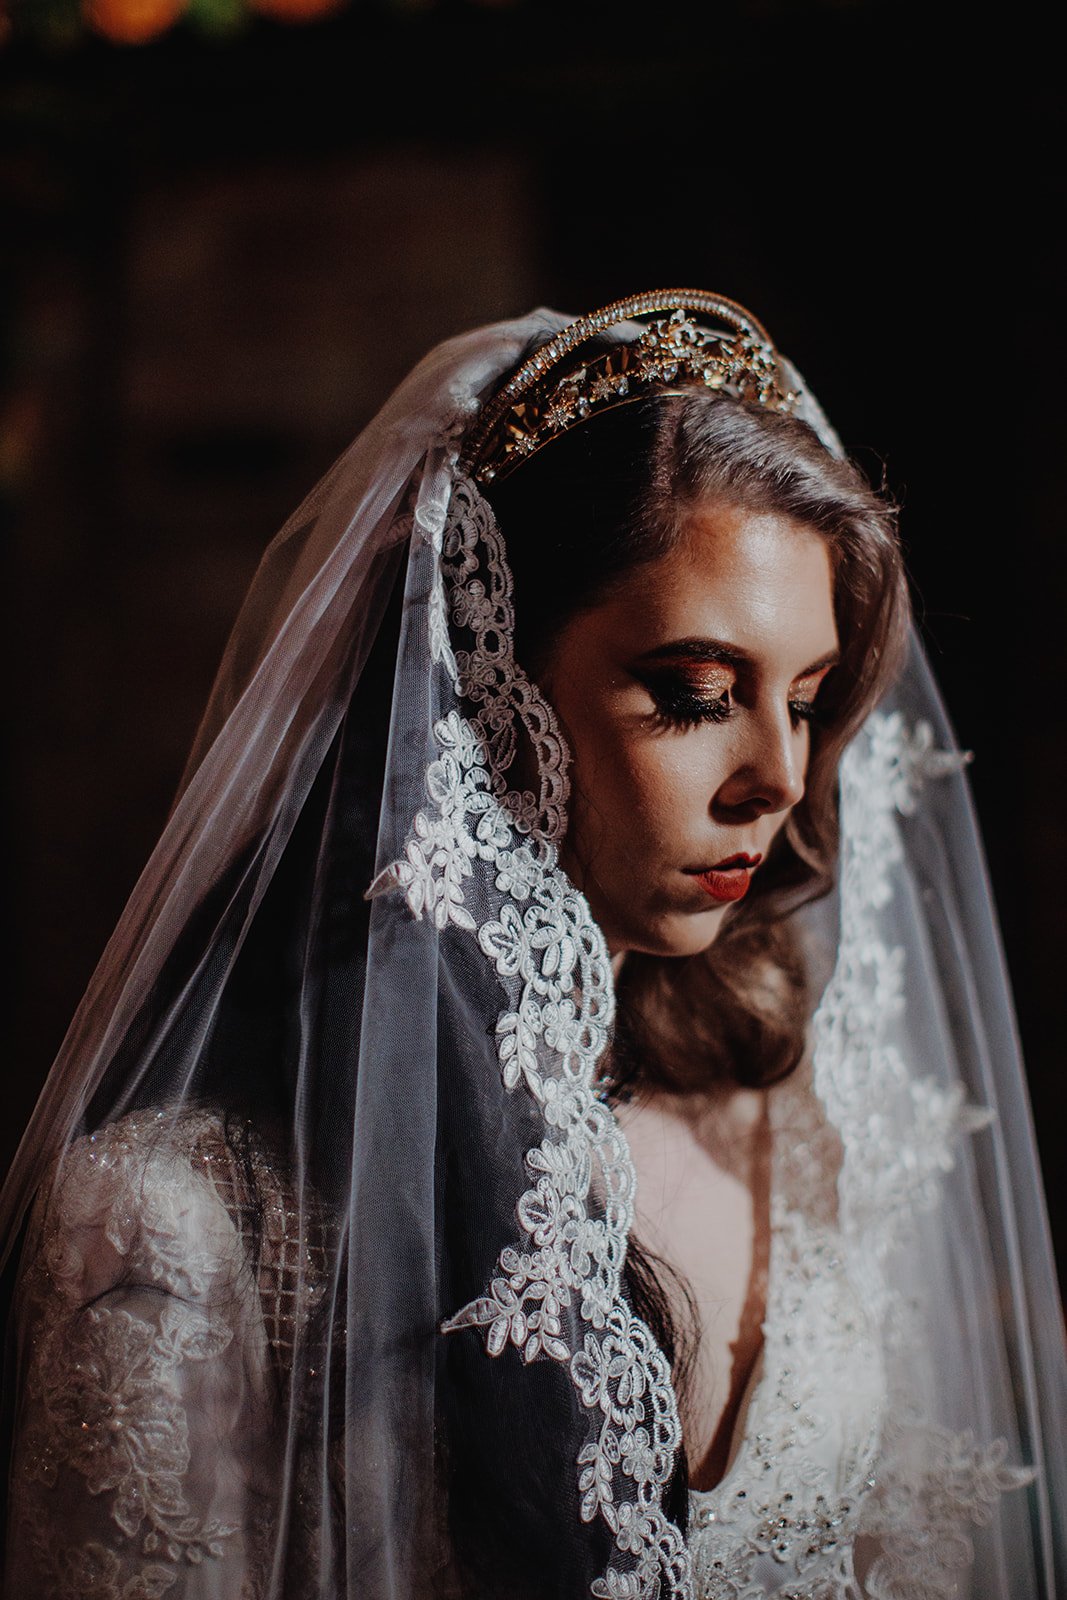 The Rise of the Anti-Bride : Embracing Alternative Weddings — ALT WEDDING CO